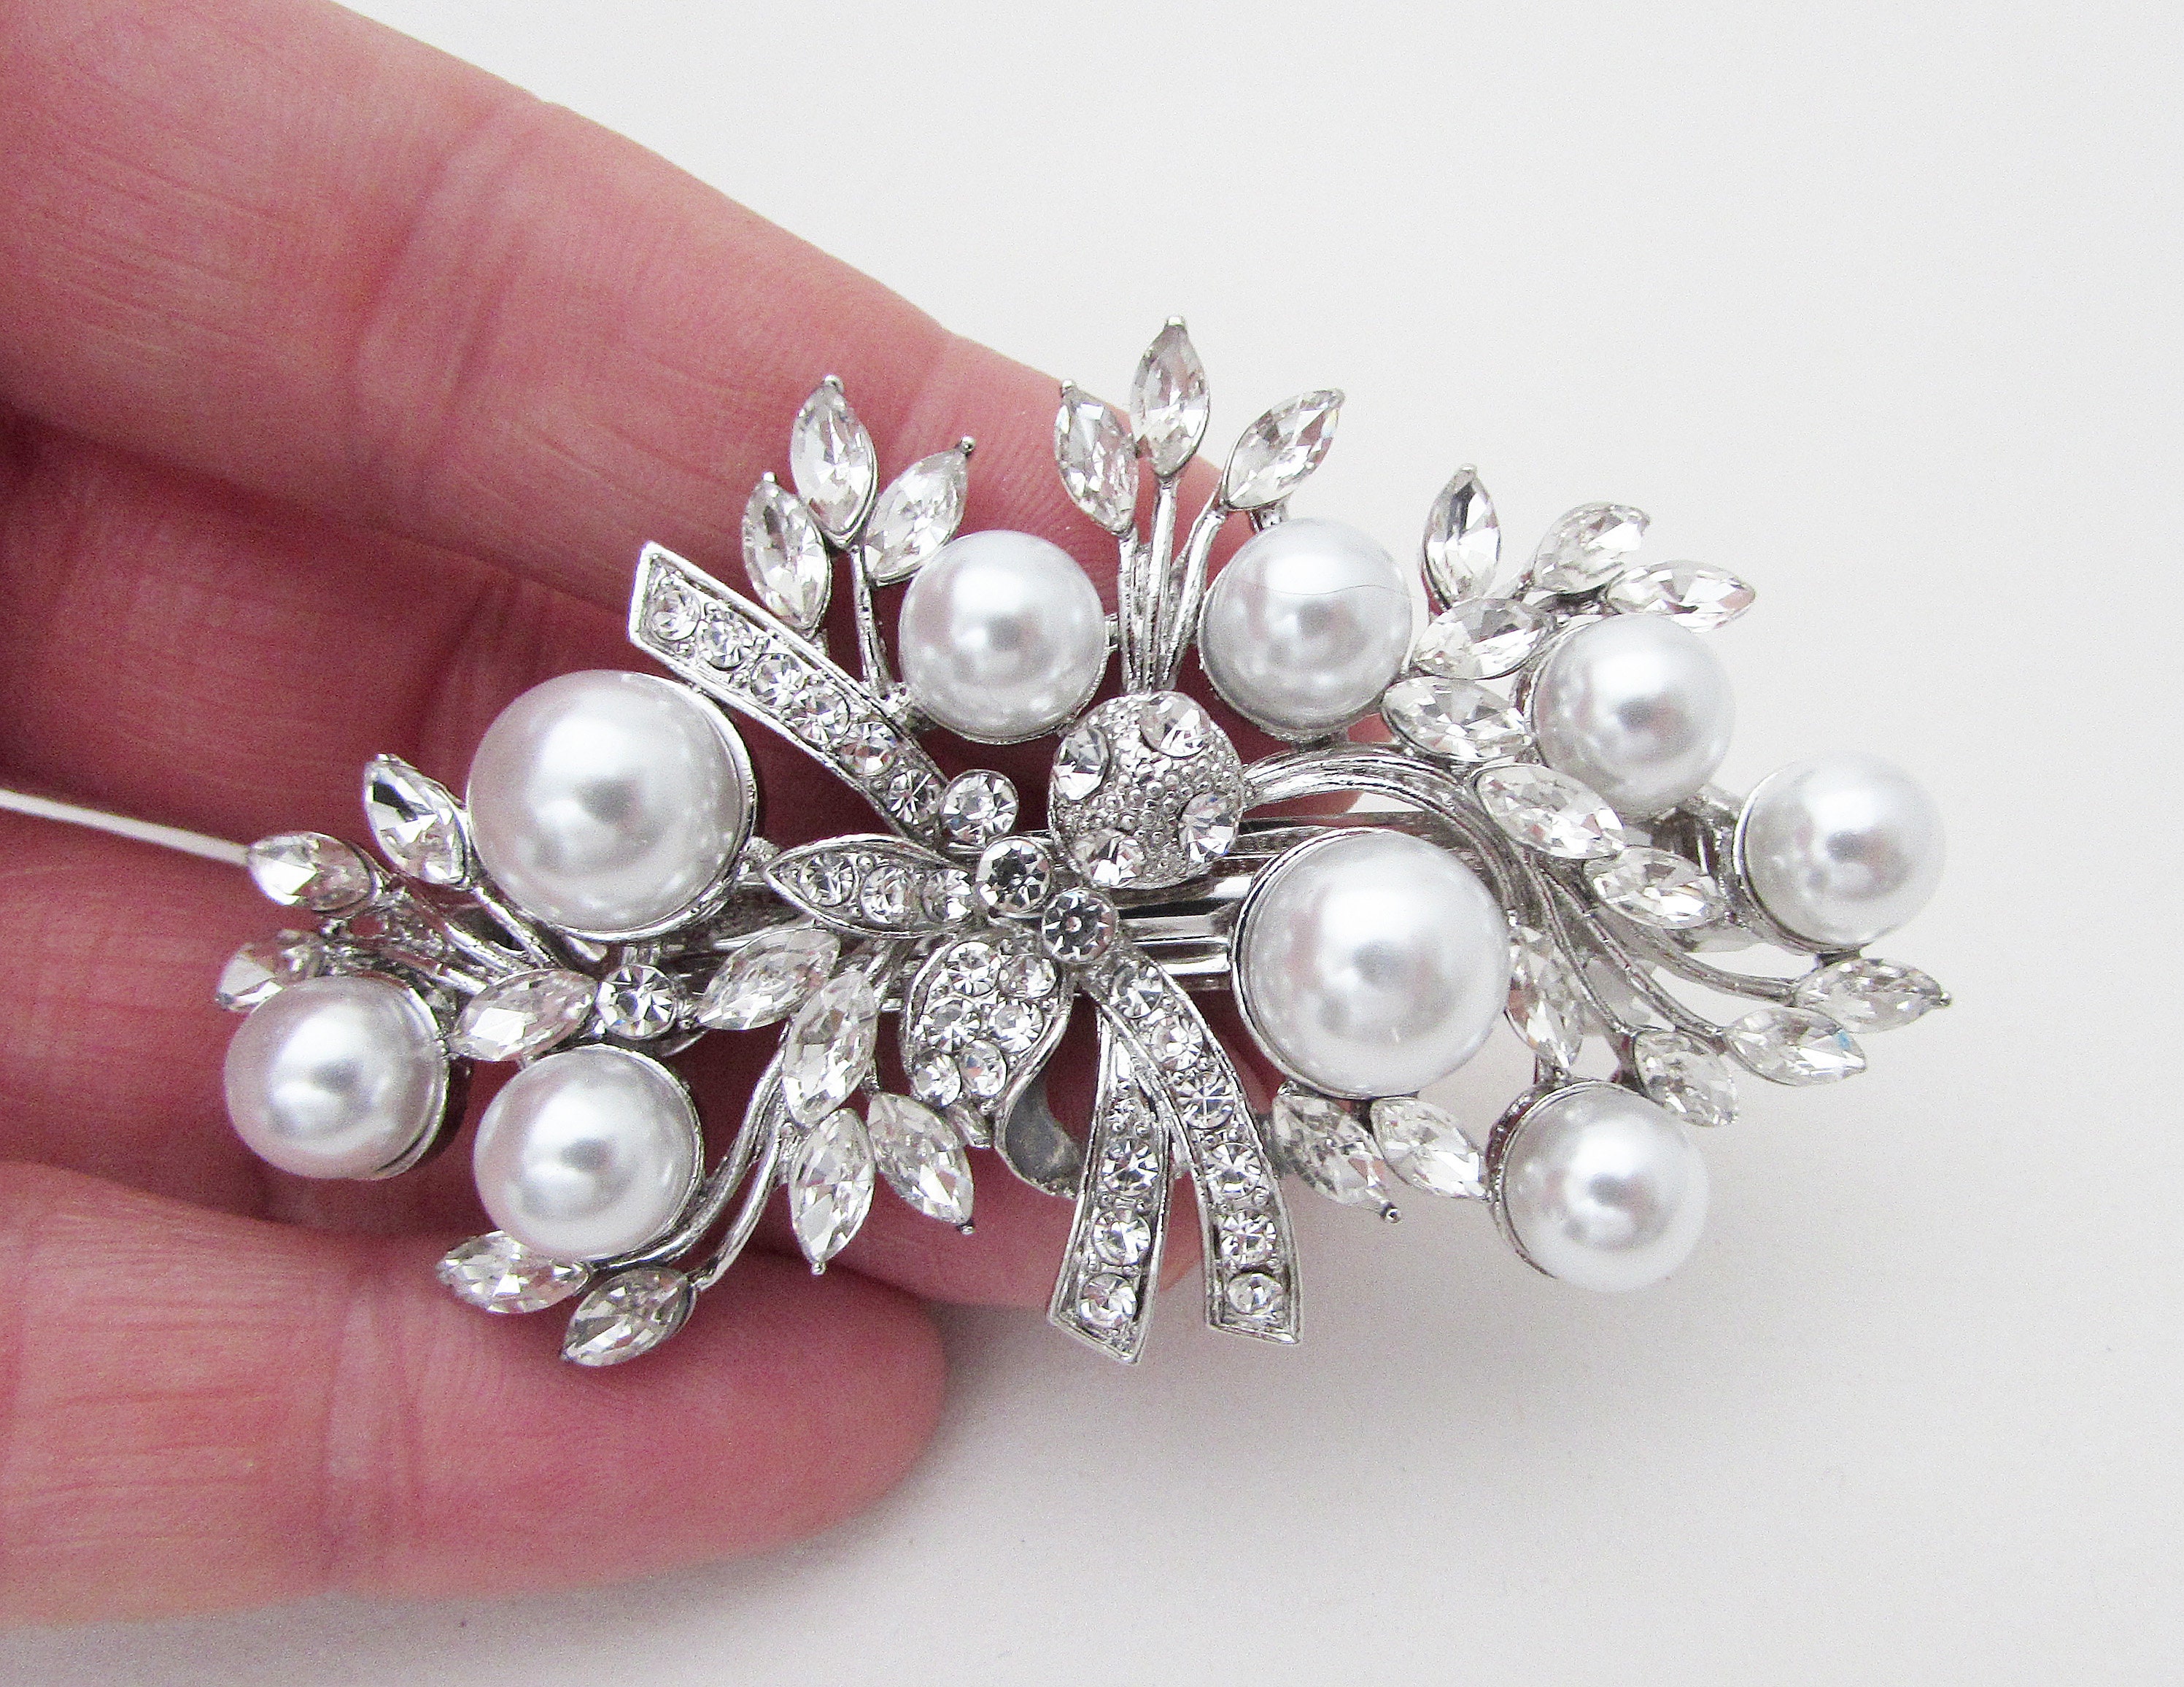 Handmade Barrette Clip Bridal Pearl Hair Accessories For Girls, Women at Rs  170/dozen, New Delhi